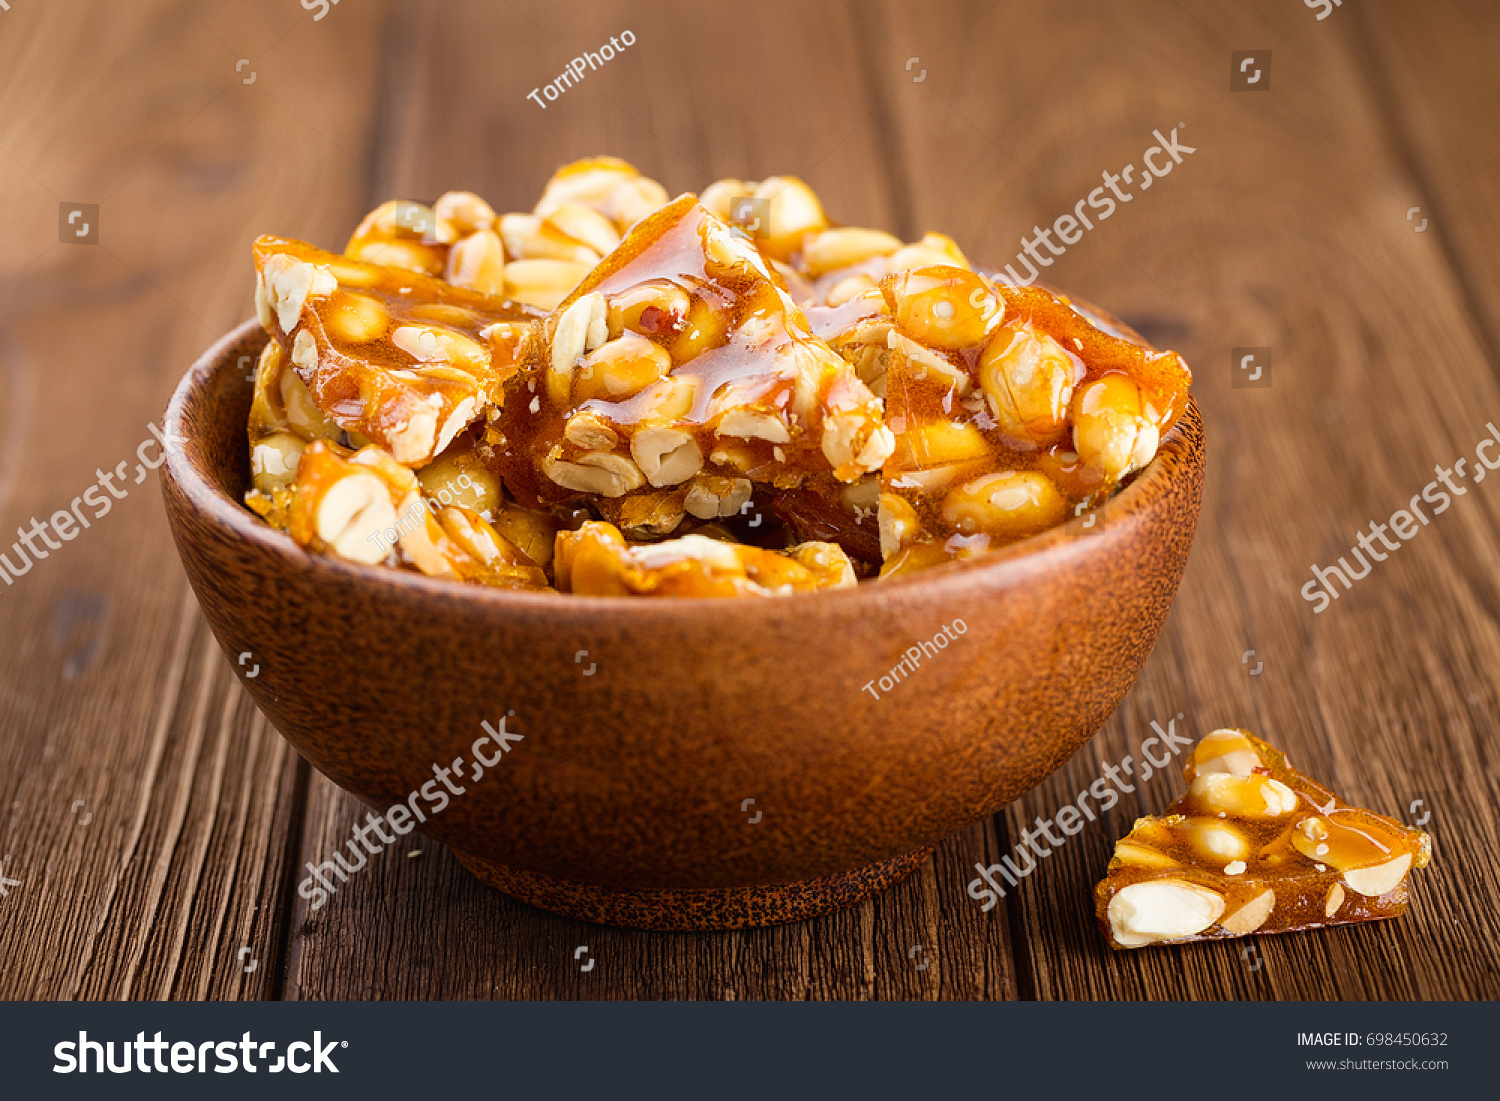 https://www.shutterstock.com/image-photo/bowl-homemade-kozinaki-made-peanuts-sugar-698450632